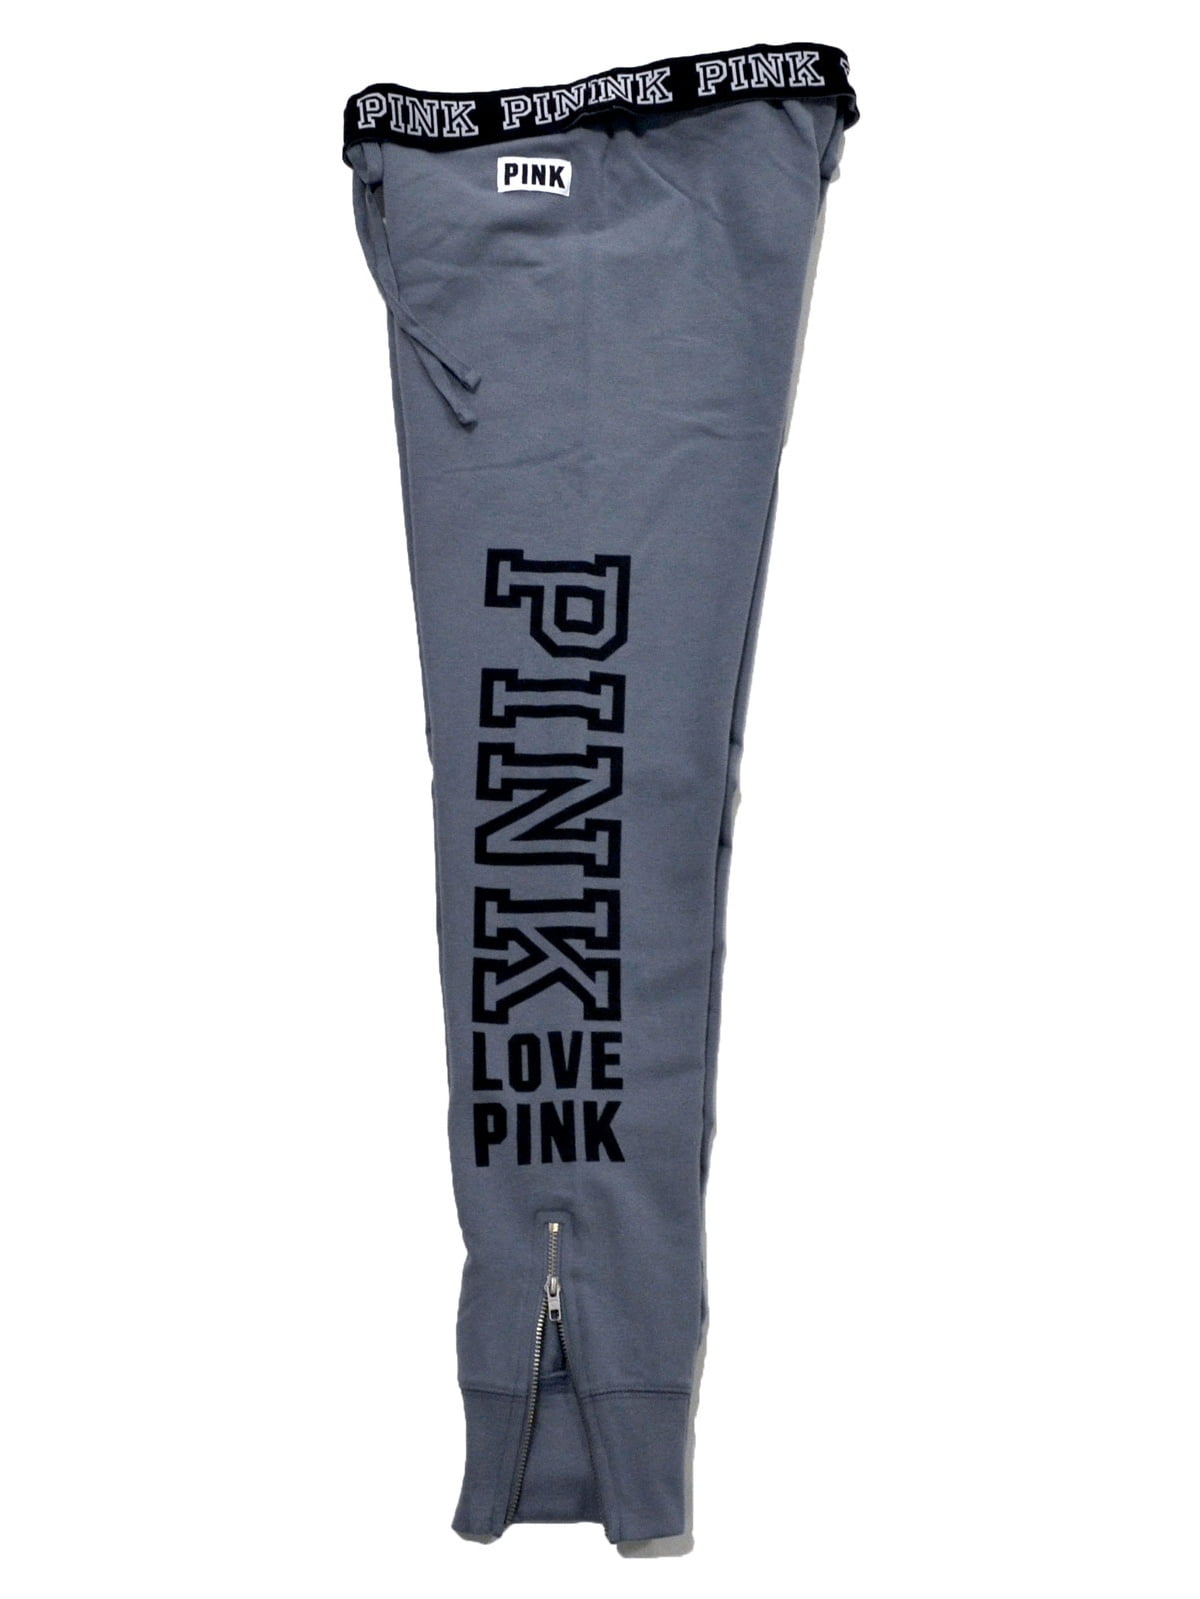 Victoria's Secret Pink Sweatpant Gym Pants (Large, Heather Grey) 